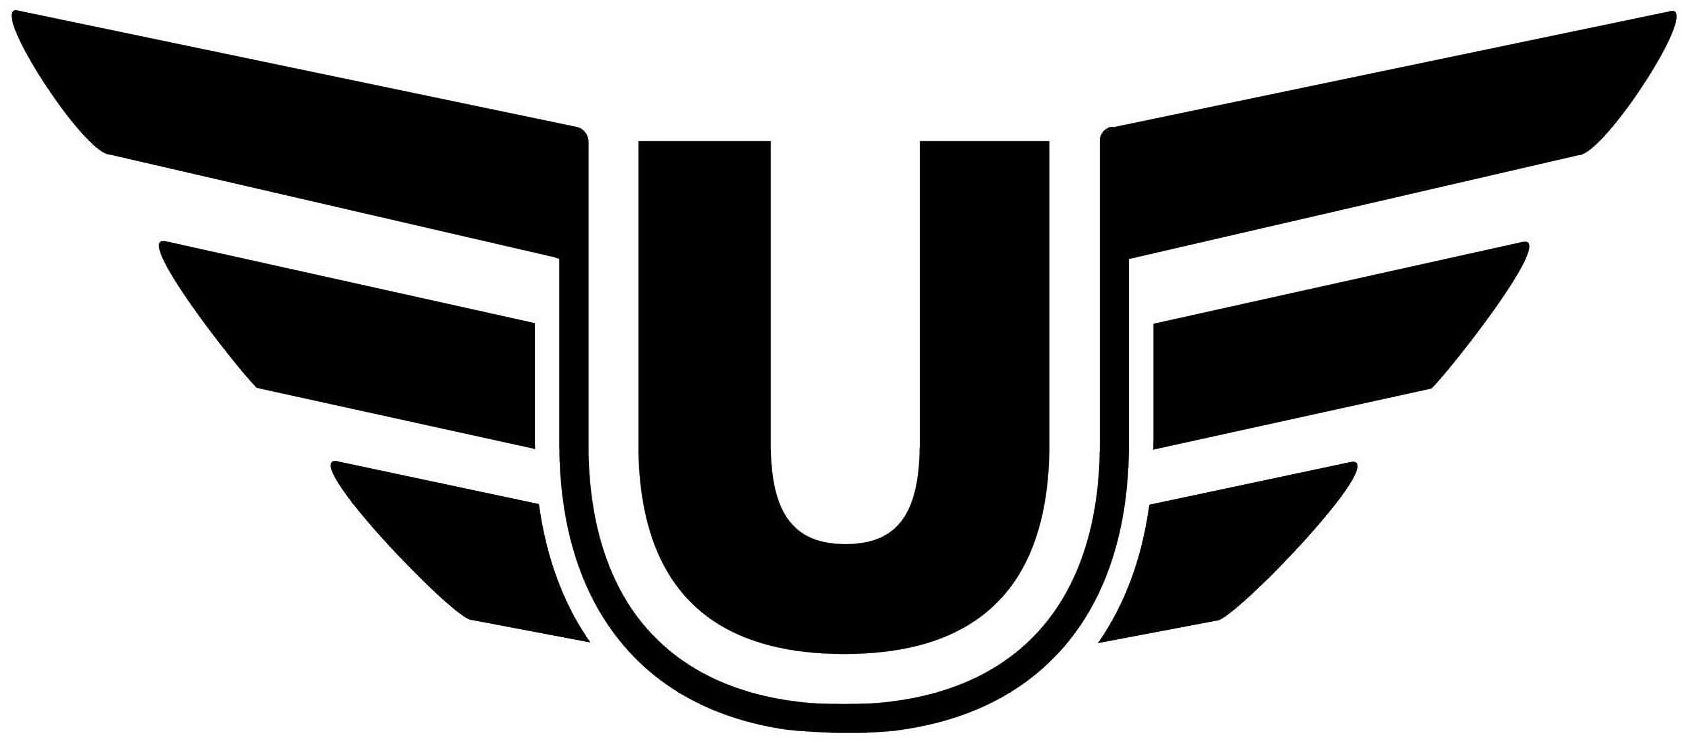 U - Swimc Llc Trademark Registration